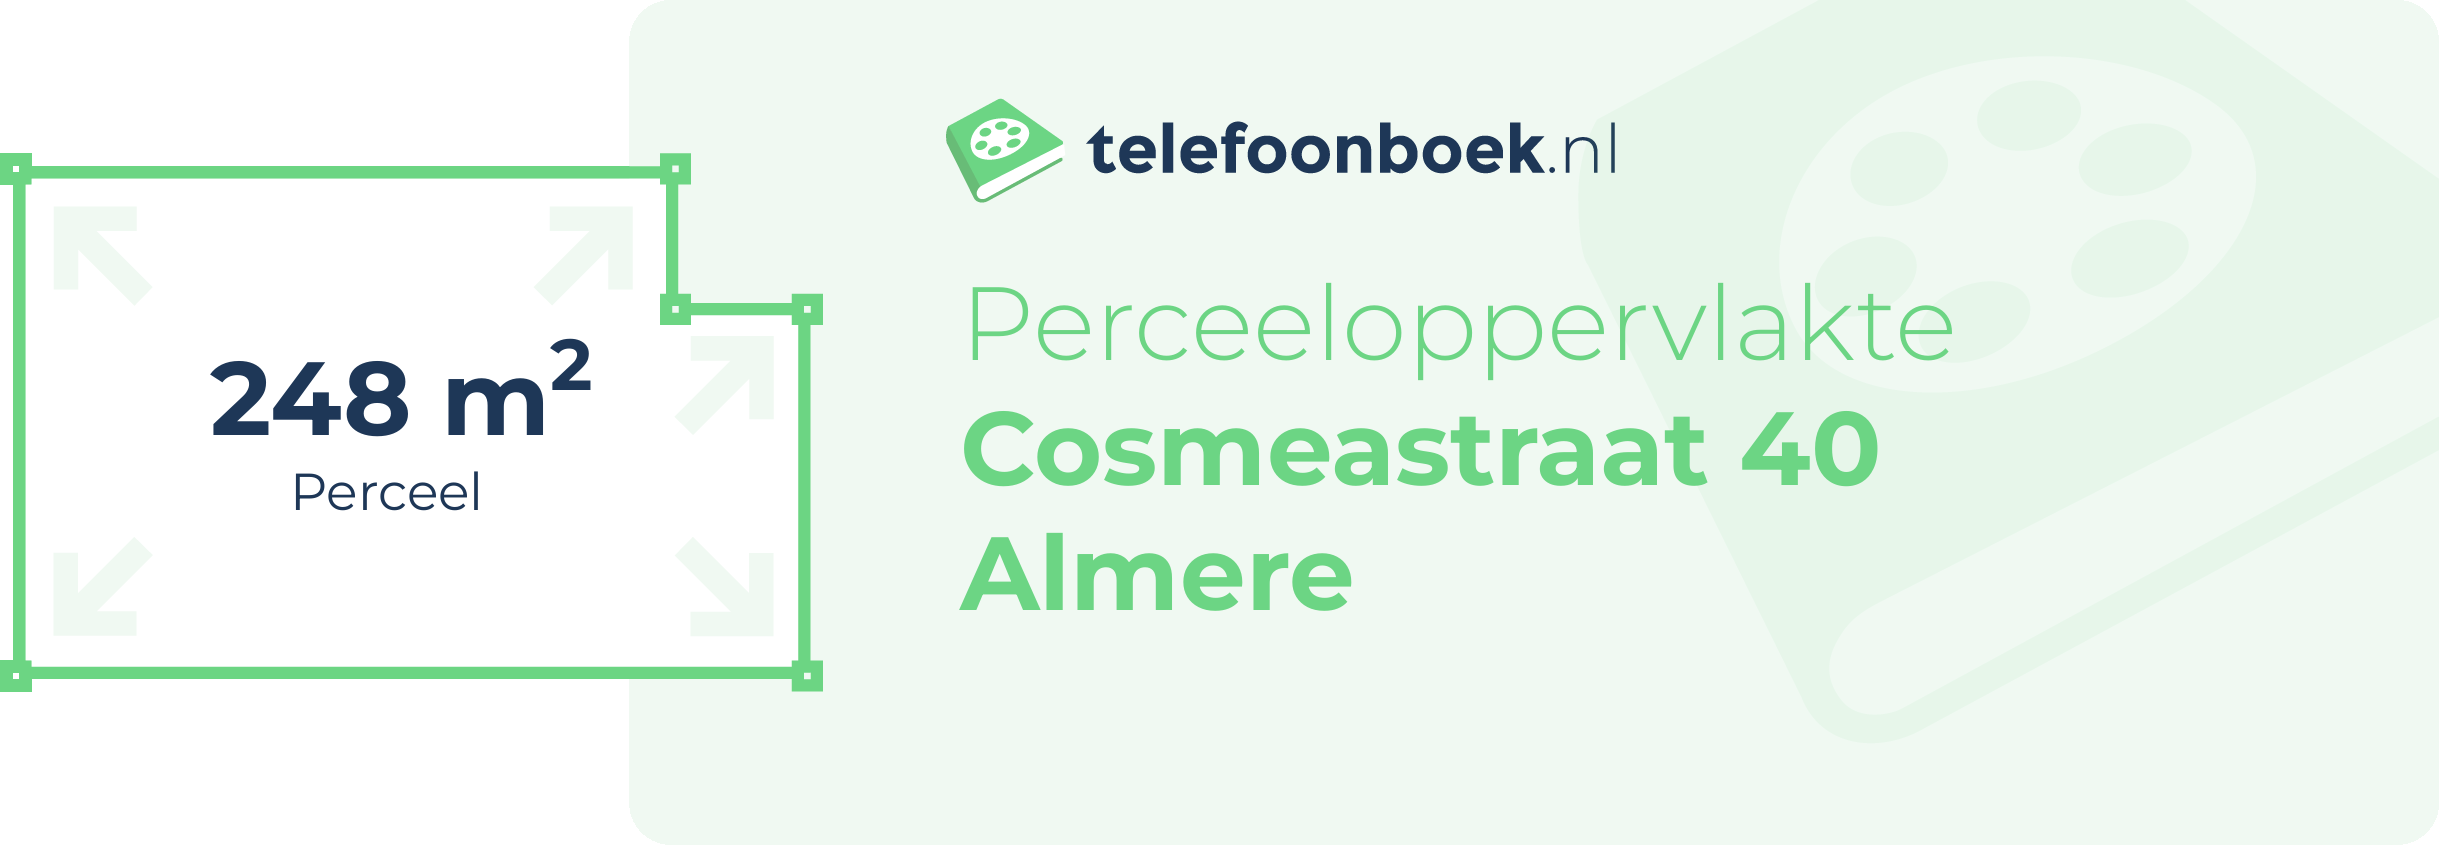 Perceeloppervlakte Cosmeastraat 40 Almere